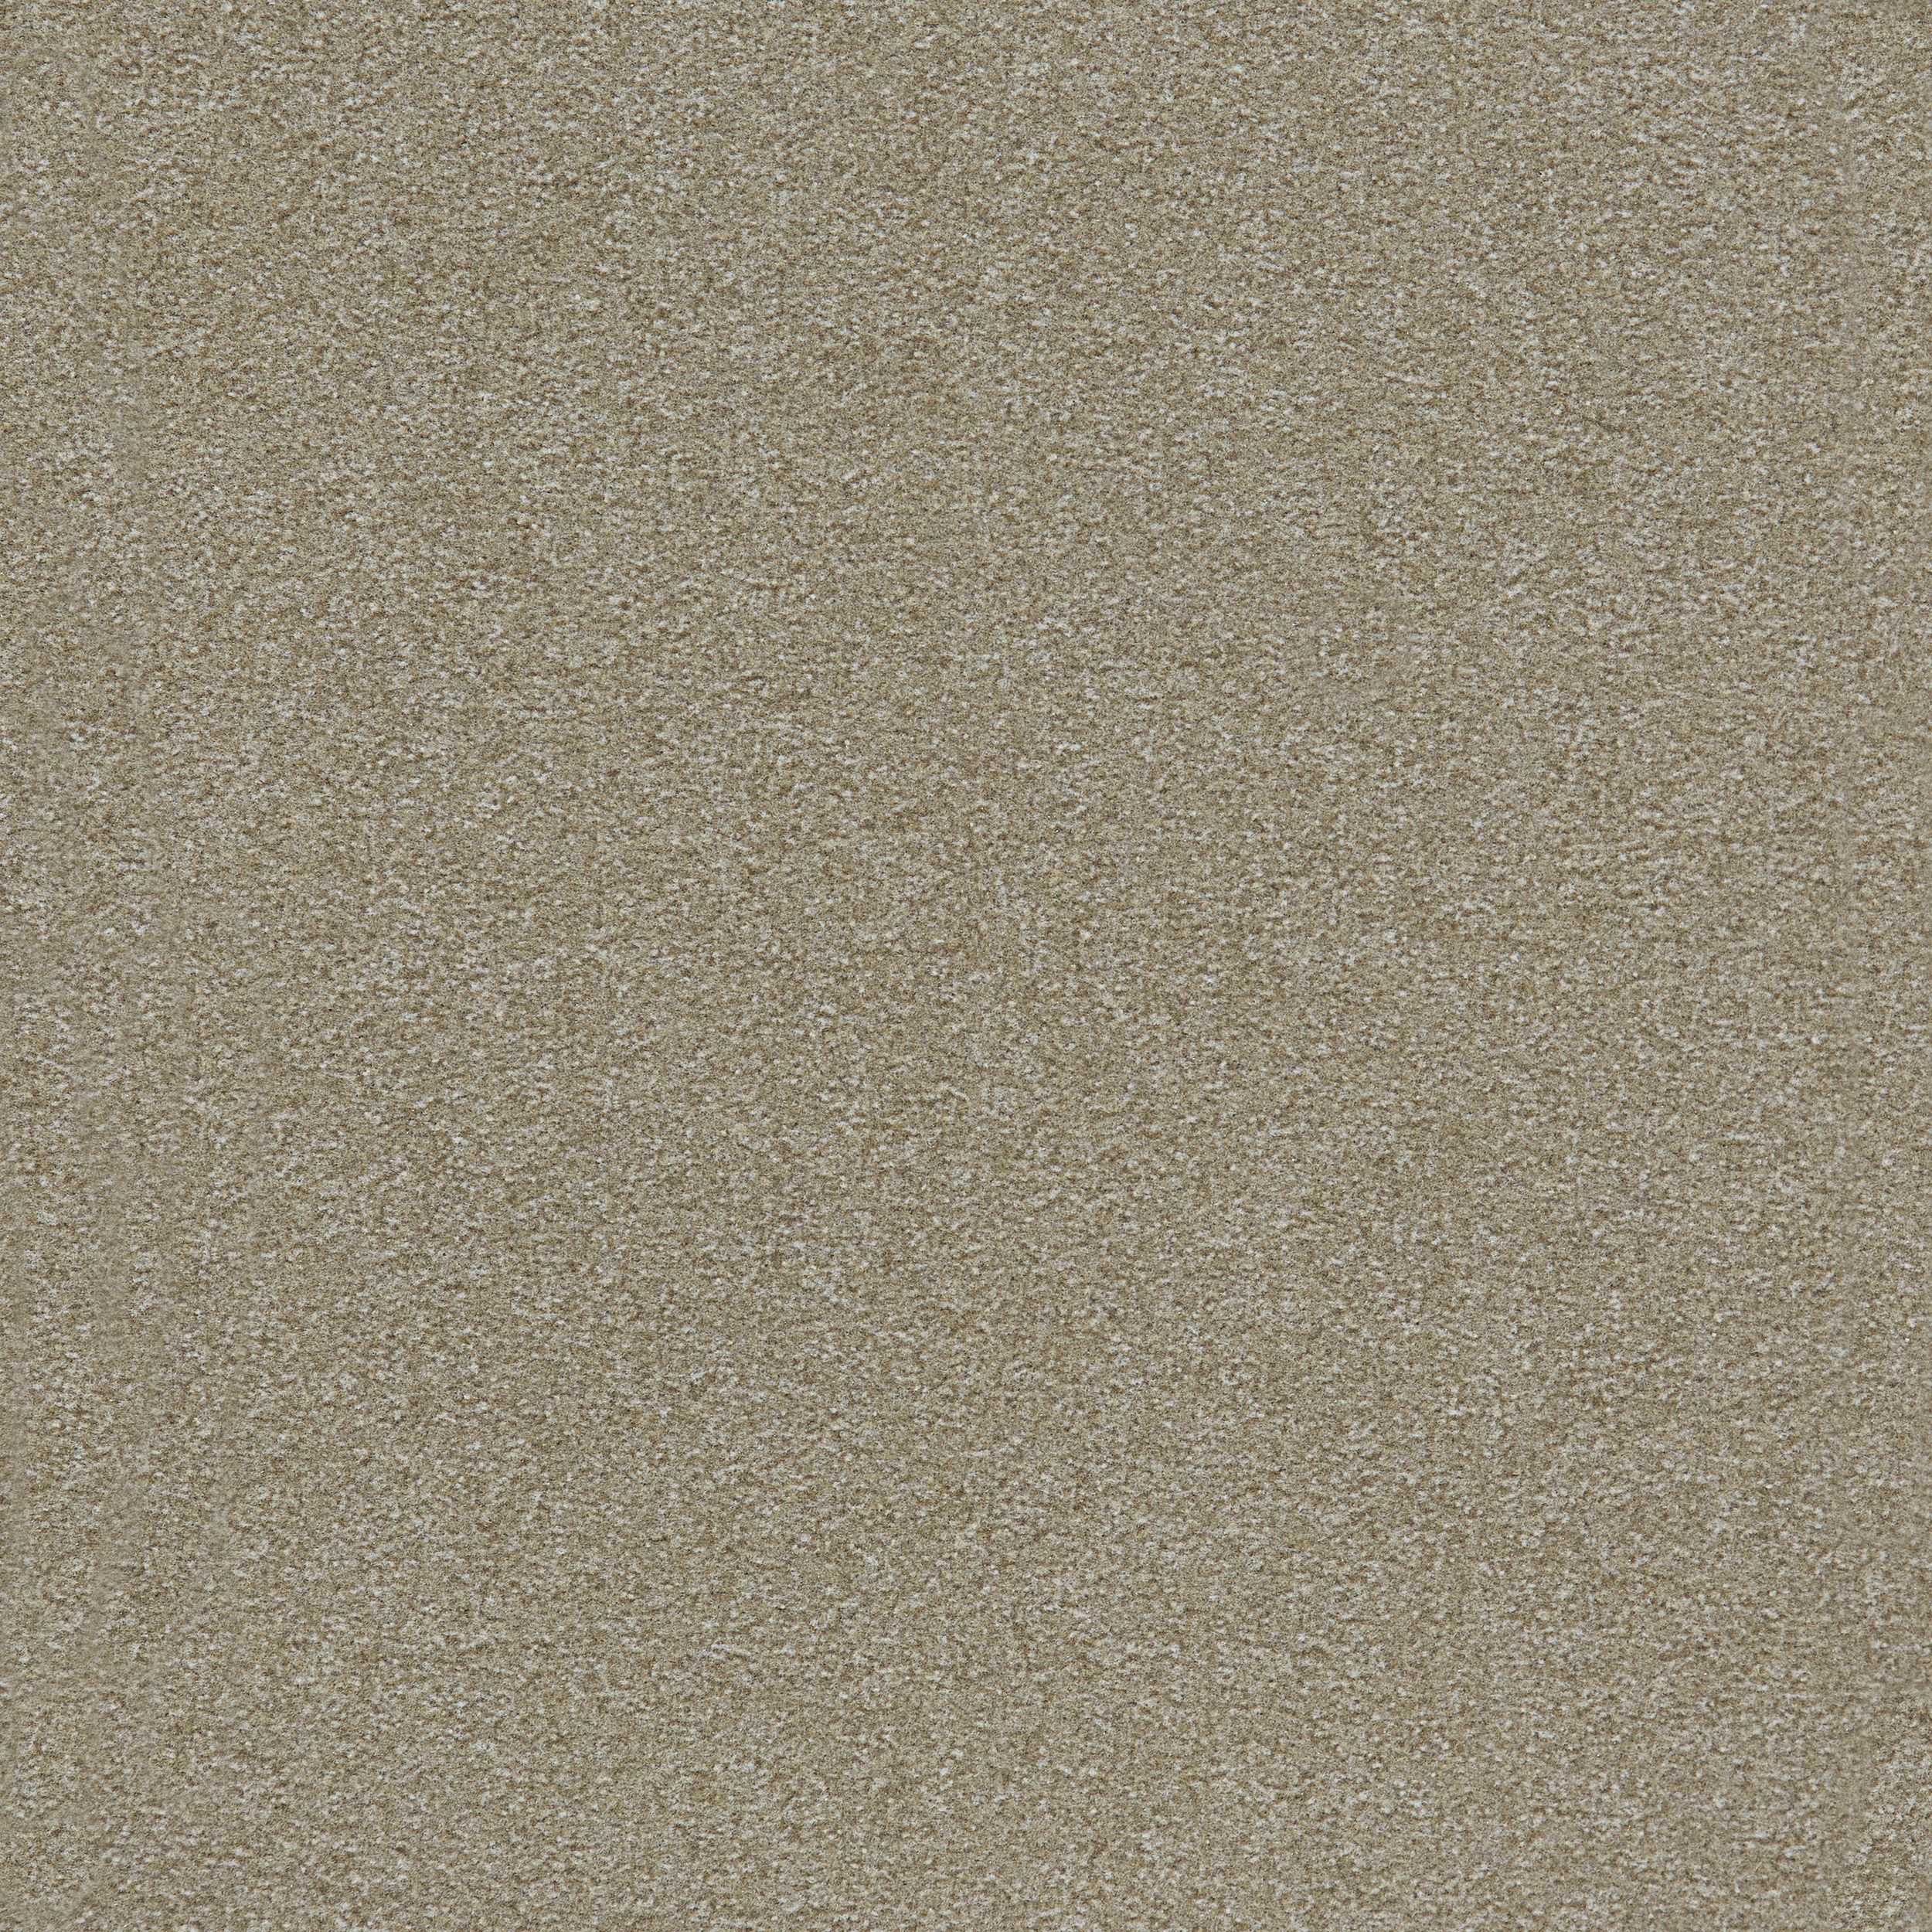 Heuga 725 Carpet Tile In Oyster afbeeldingnummer 7